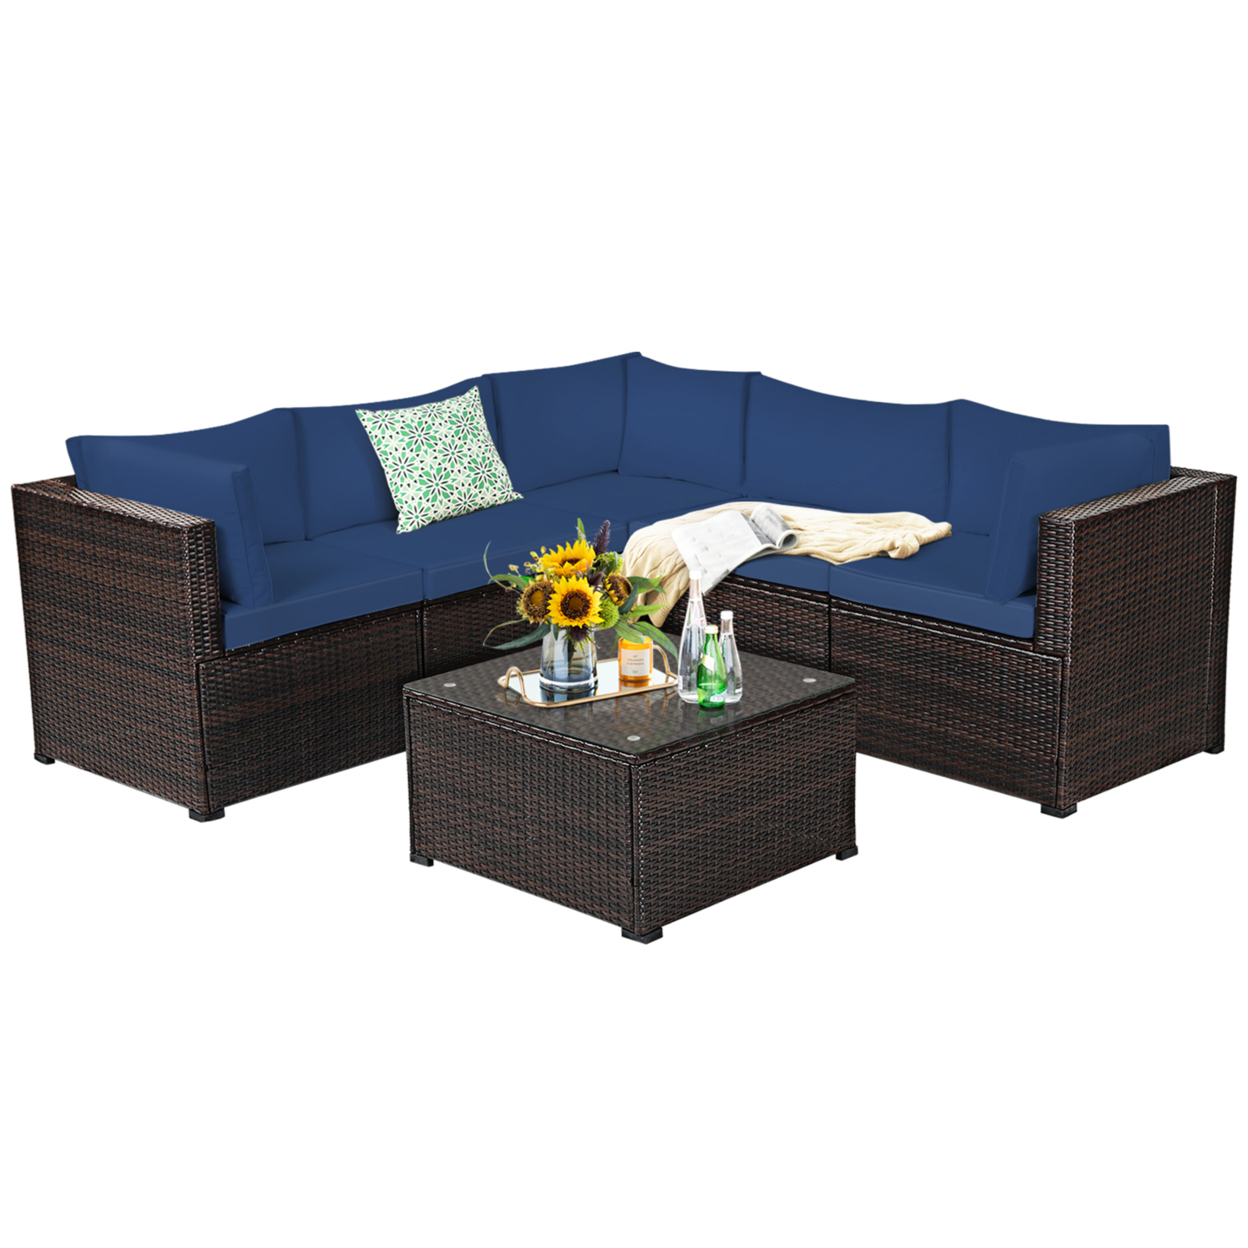 6PCS Rattan Patio Sectional Sofa Conversation Set Outdoor W/ Navy Cushions